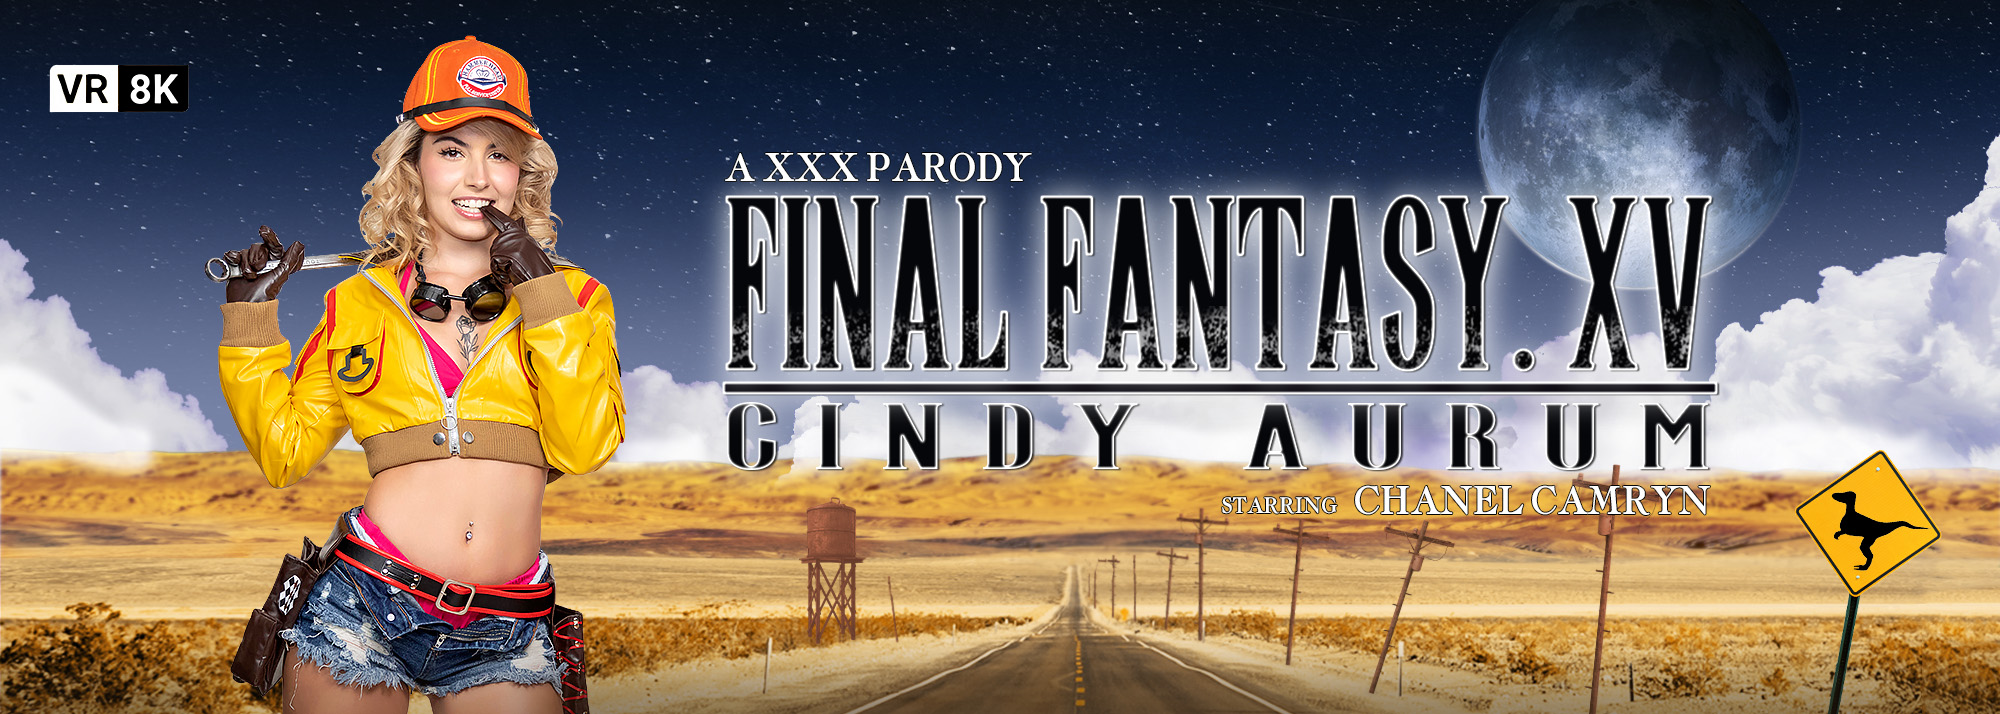 Final Fantasy XV: Cindy Aurum (A XXX Parody) - VR Porn Video, Starring Chanel Camryn VR